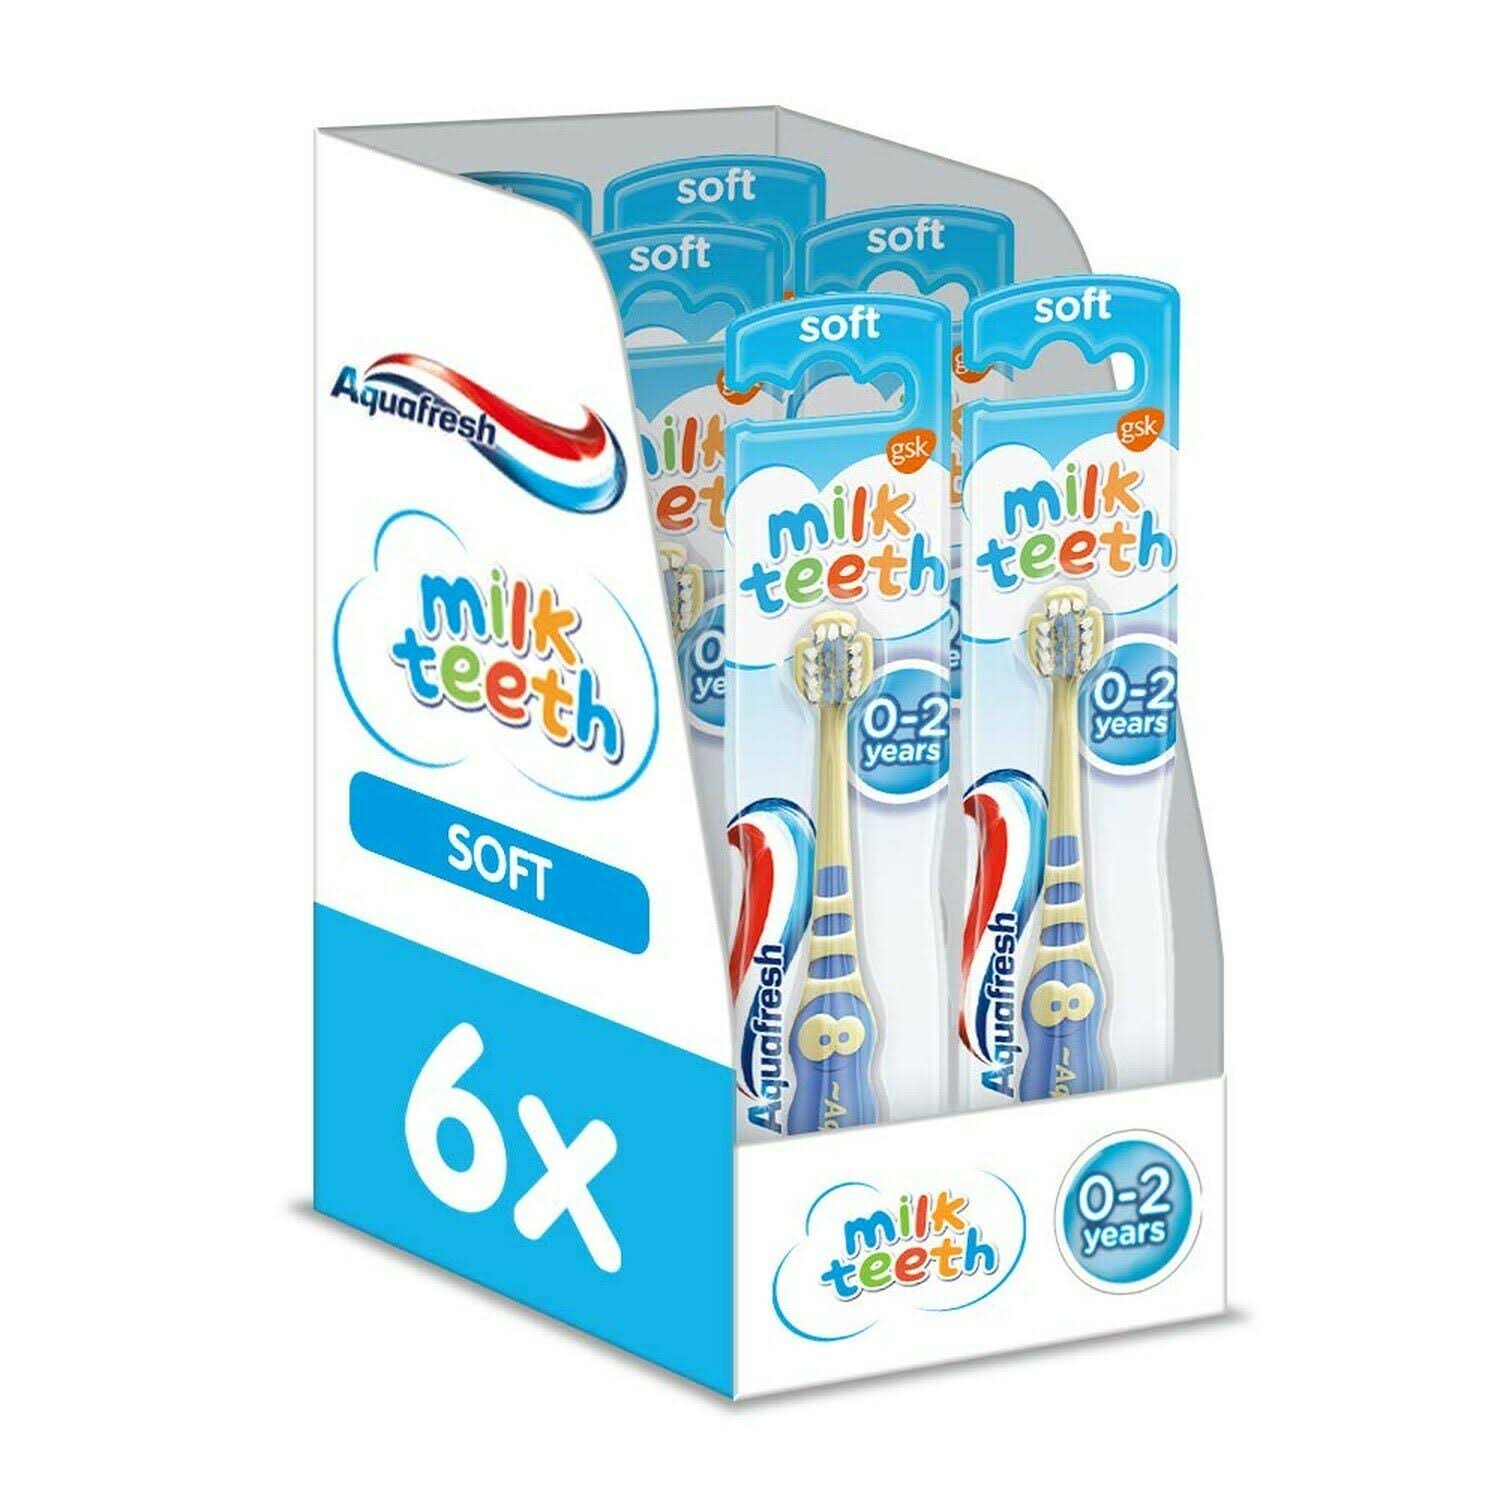 Aquafresh Milk Teeth Soft Bristles Toothbrush - 0 to 2 Years